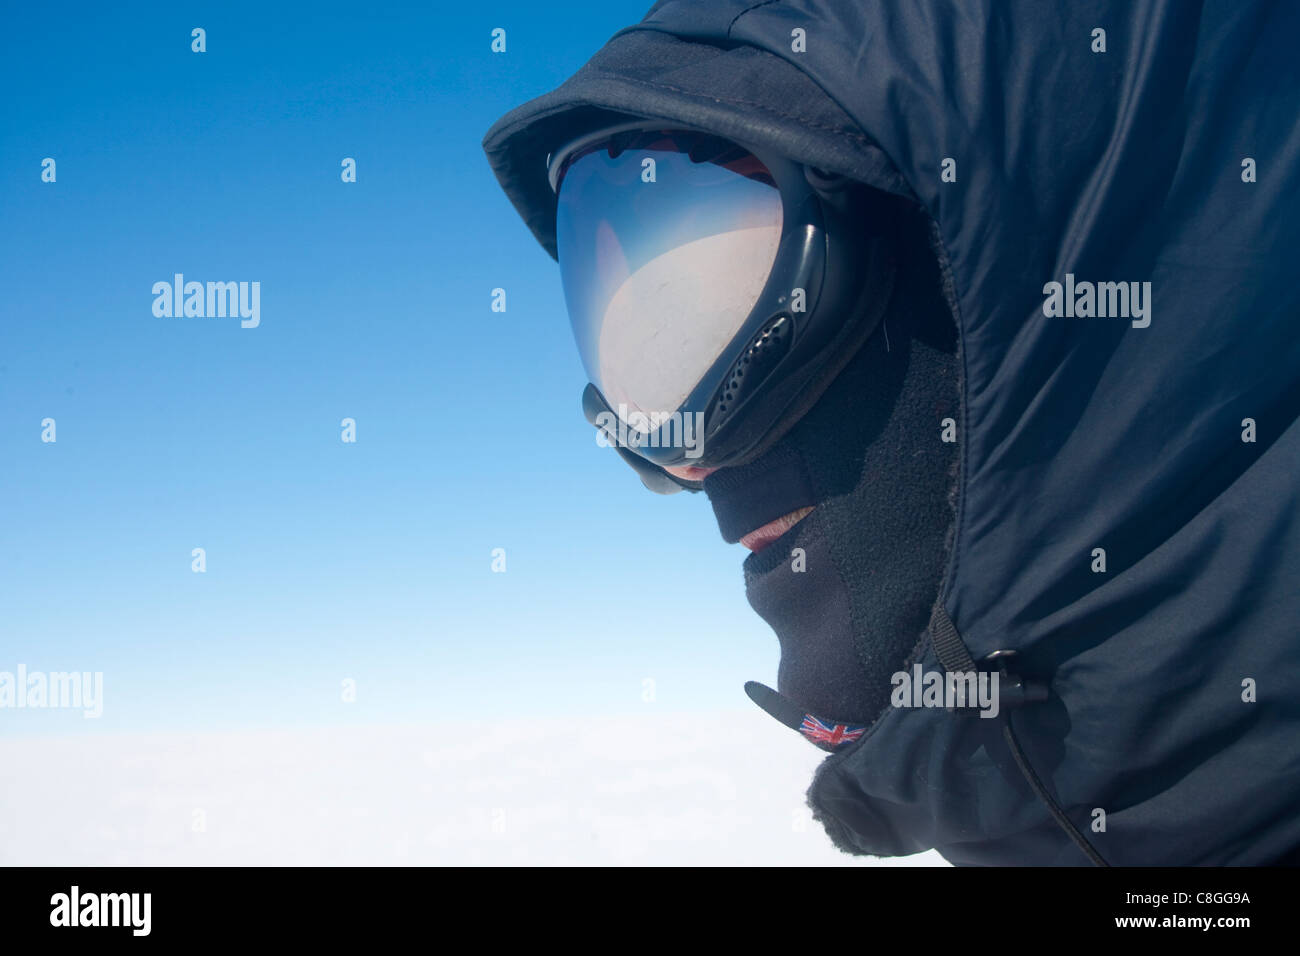 Portrait of polar explorer dressed for Arctic conditions, inland ice, Greenland, Polar Regions Stock Photo